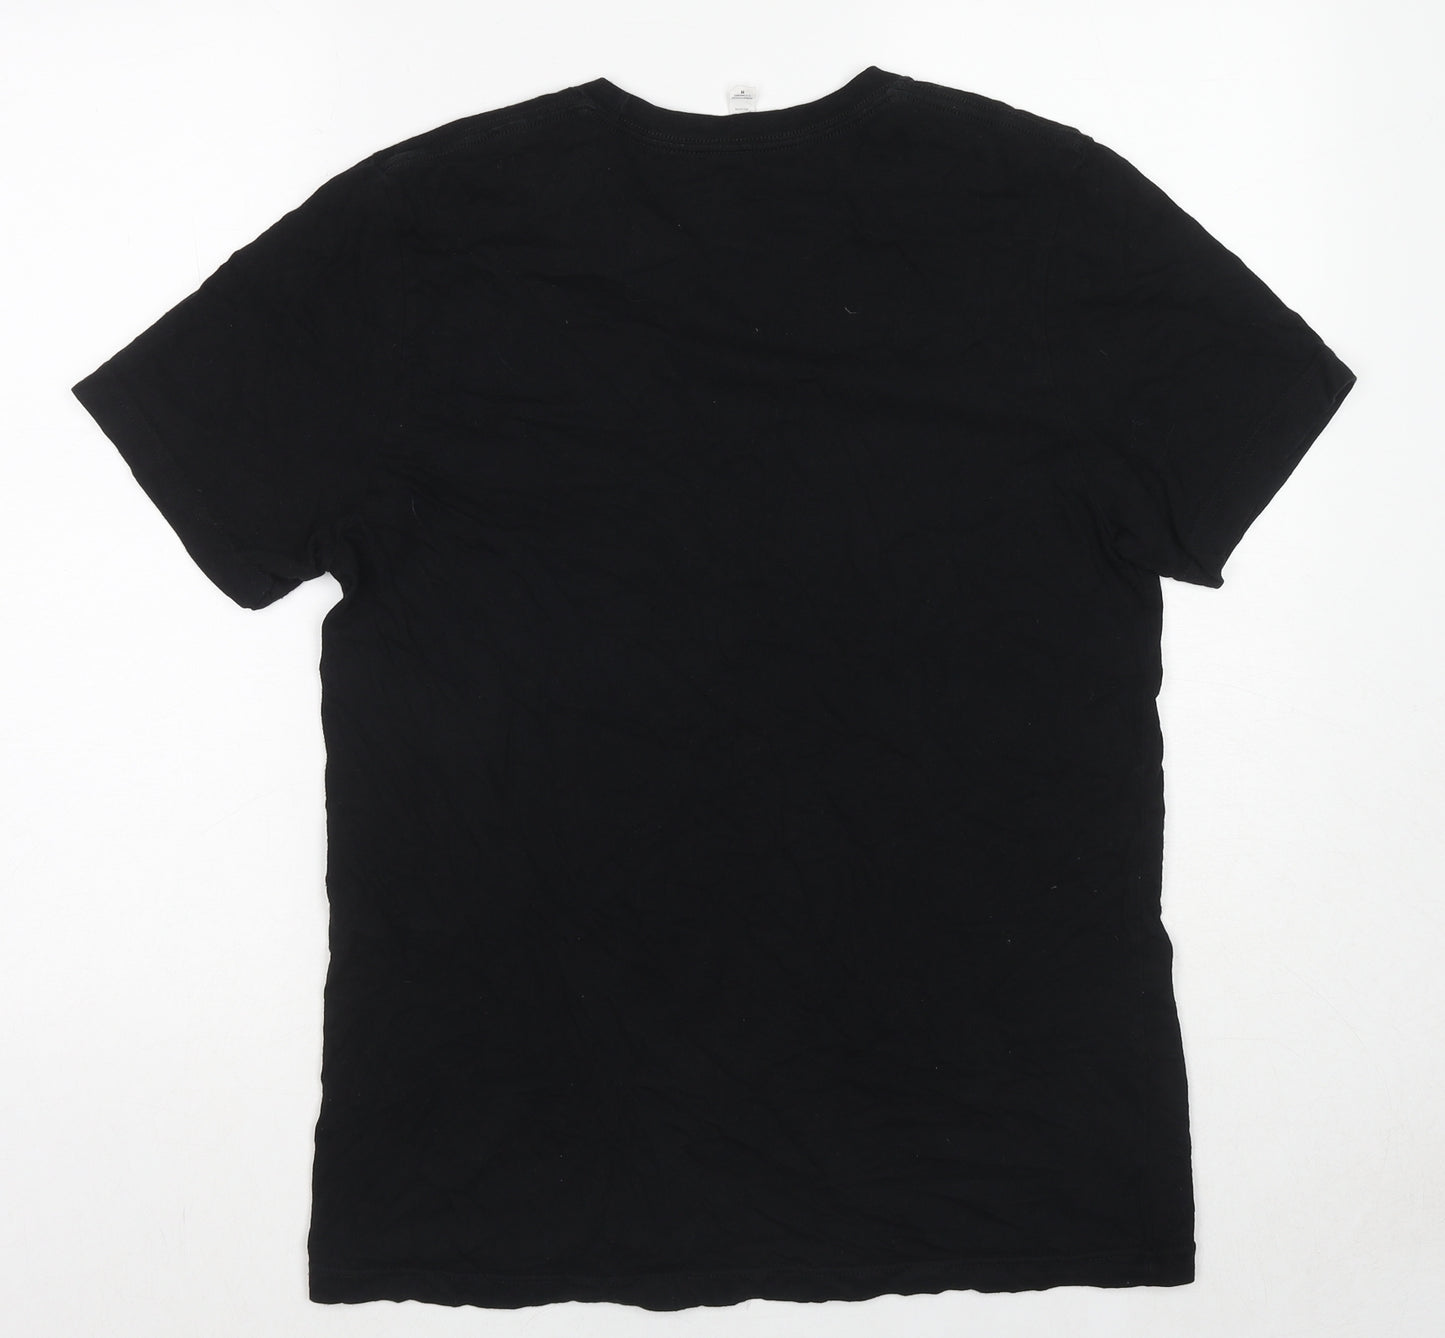 The Spark Company Womens Black Cotton Basic T-Shirt Size M Round Neck